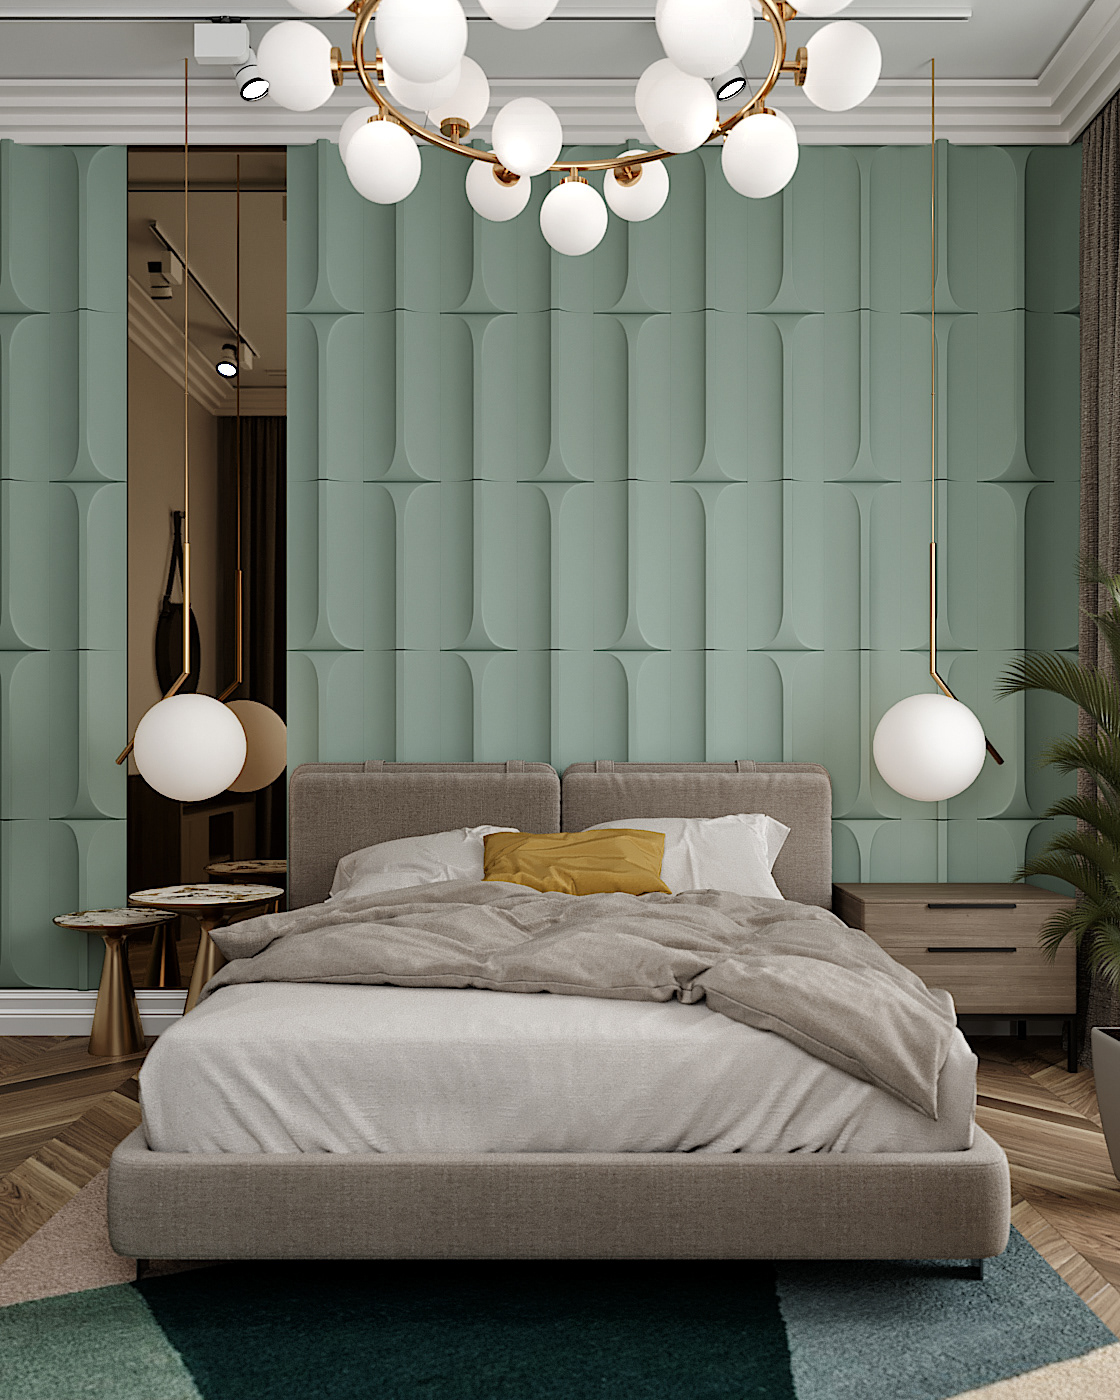 3D 3ds max bedroom furniture interior design 